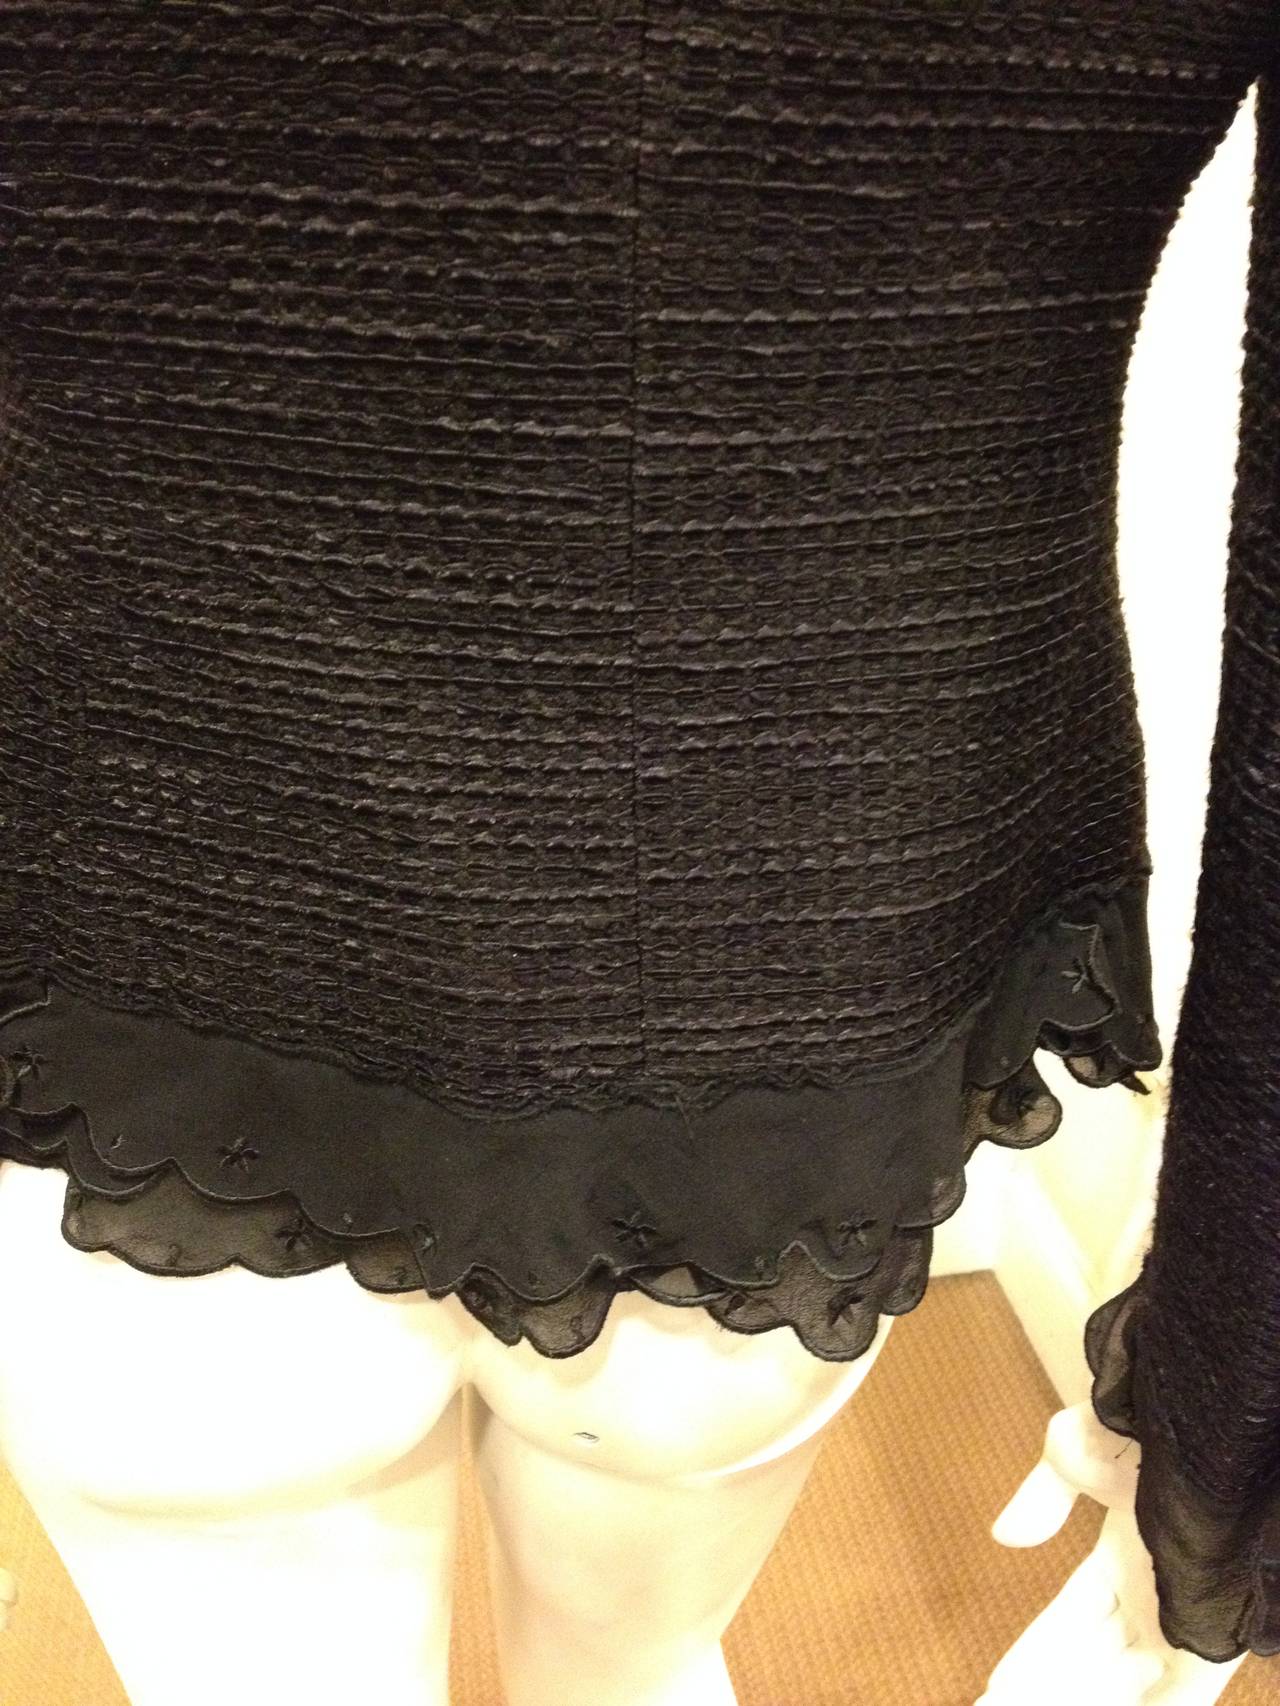 Moschino Black Tweed Jacket with Scalloped Chiffon Collar 1